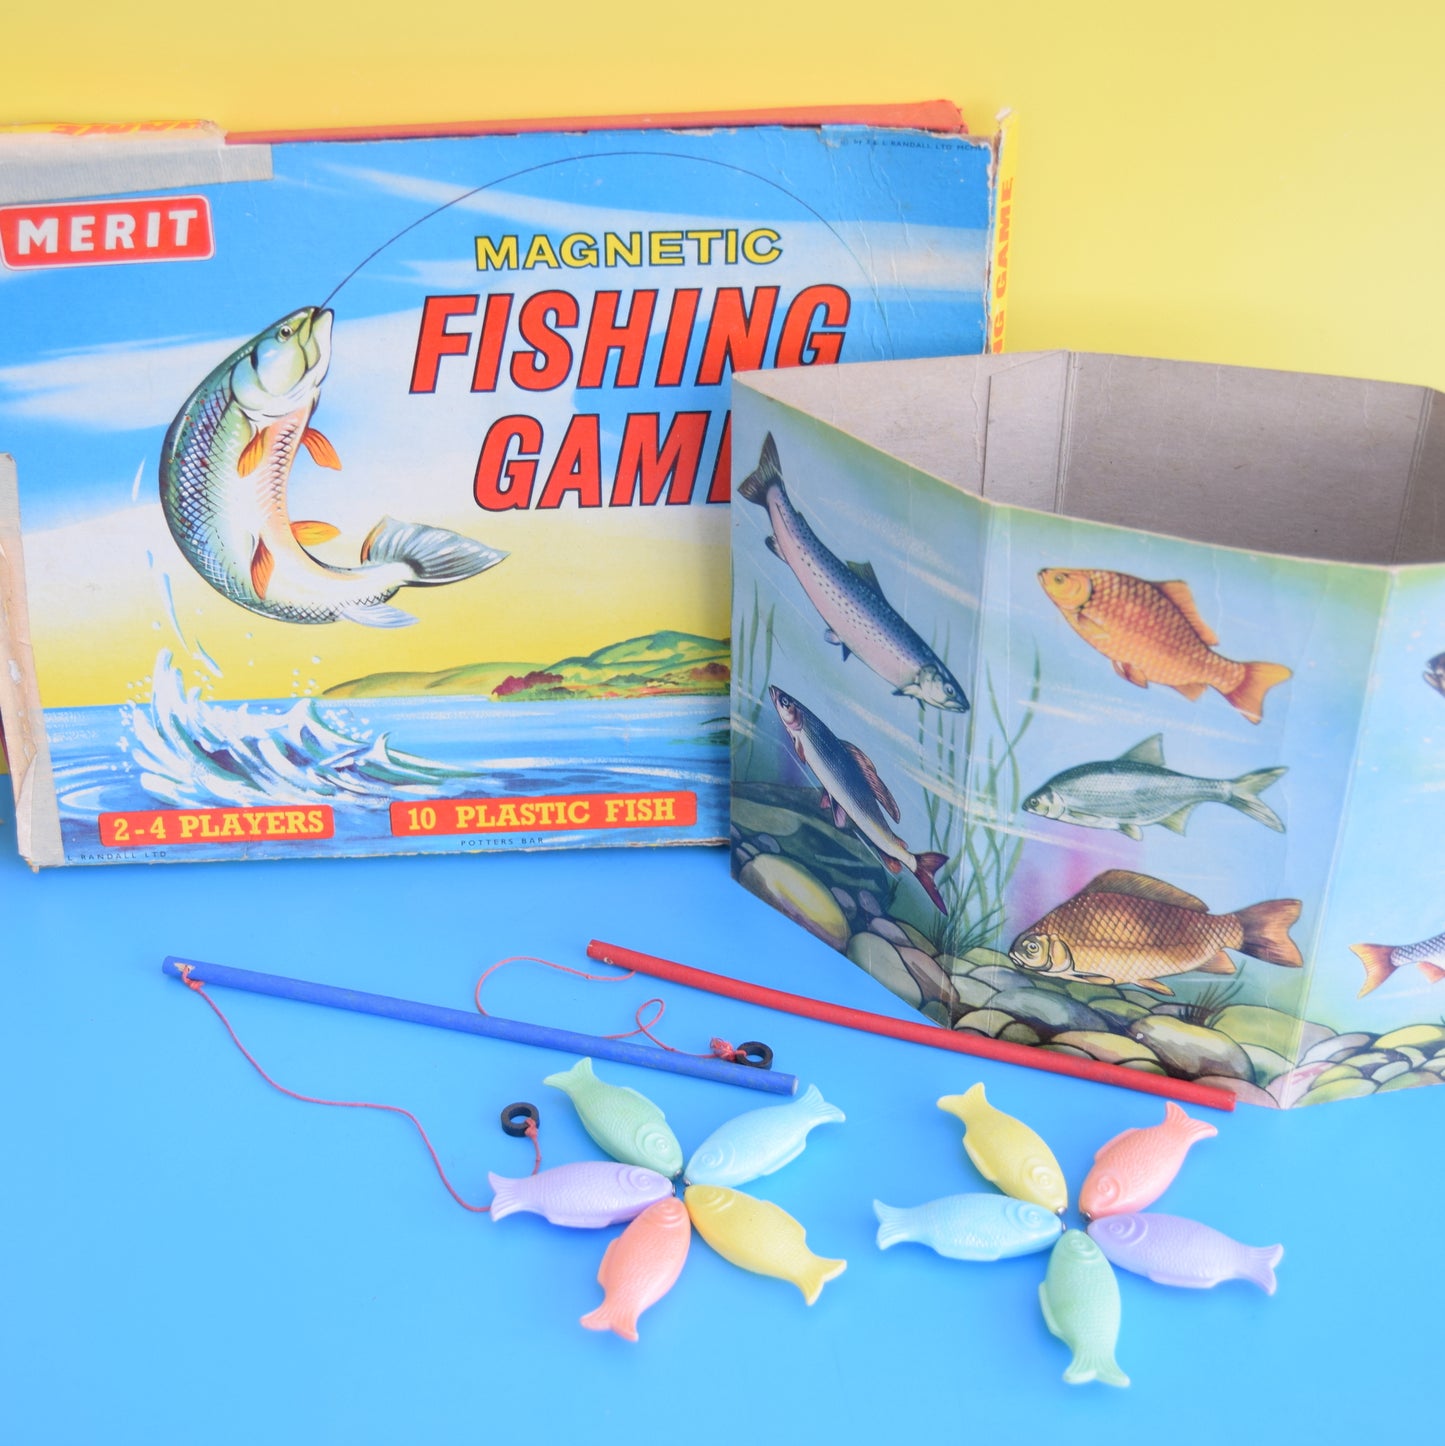 Vintage 1960s Magnetic Fishing Game - Merit - Plastic Fish